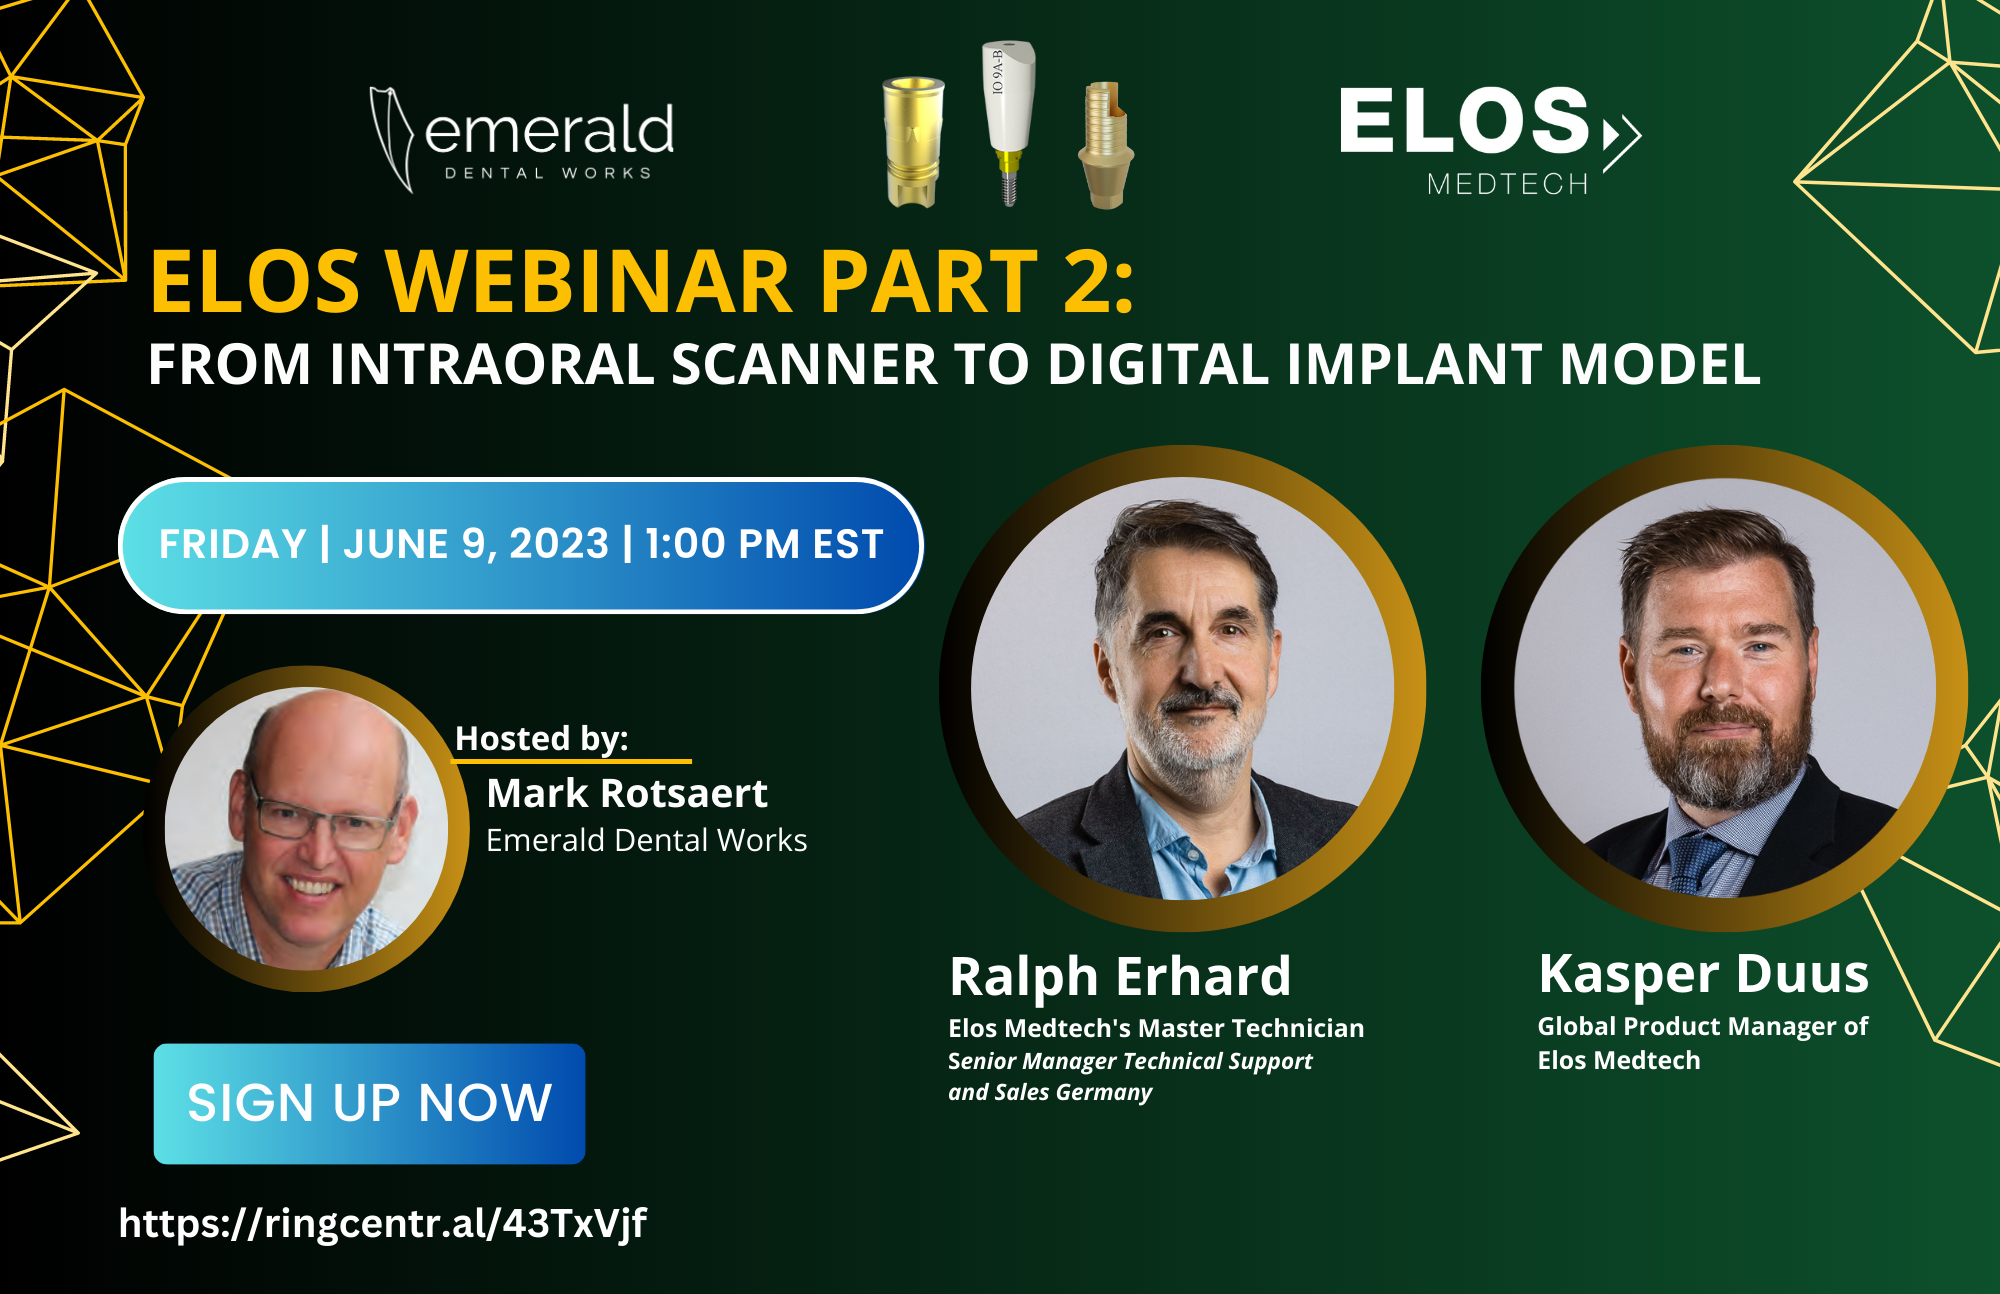 Replay: Elos Medtech Webinar Part 2: From Intraoral Scanner to Digital Implant Model